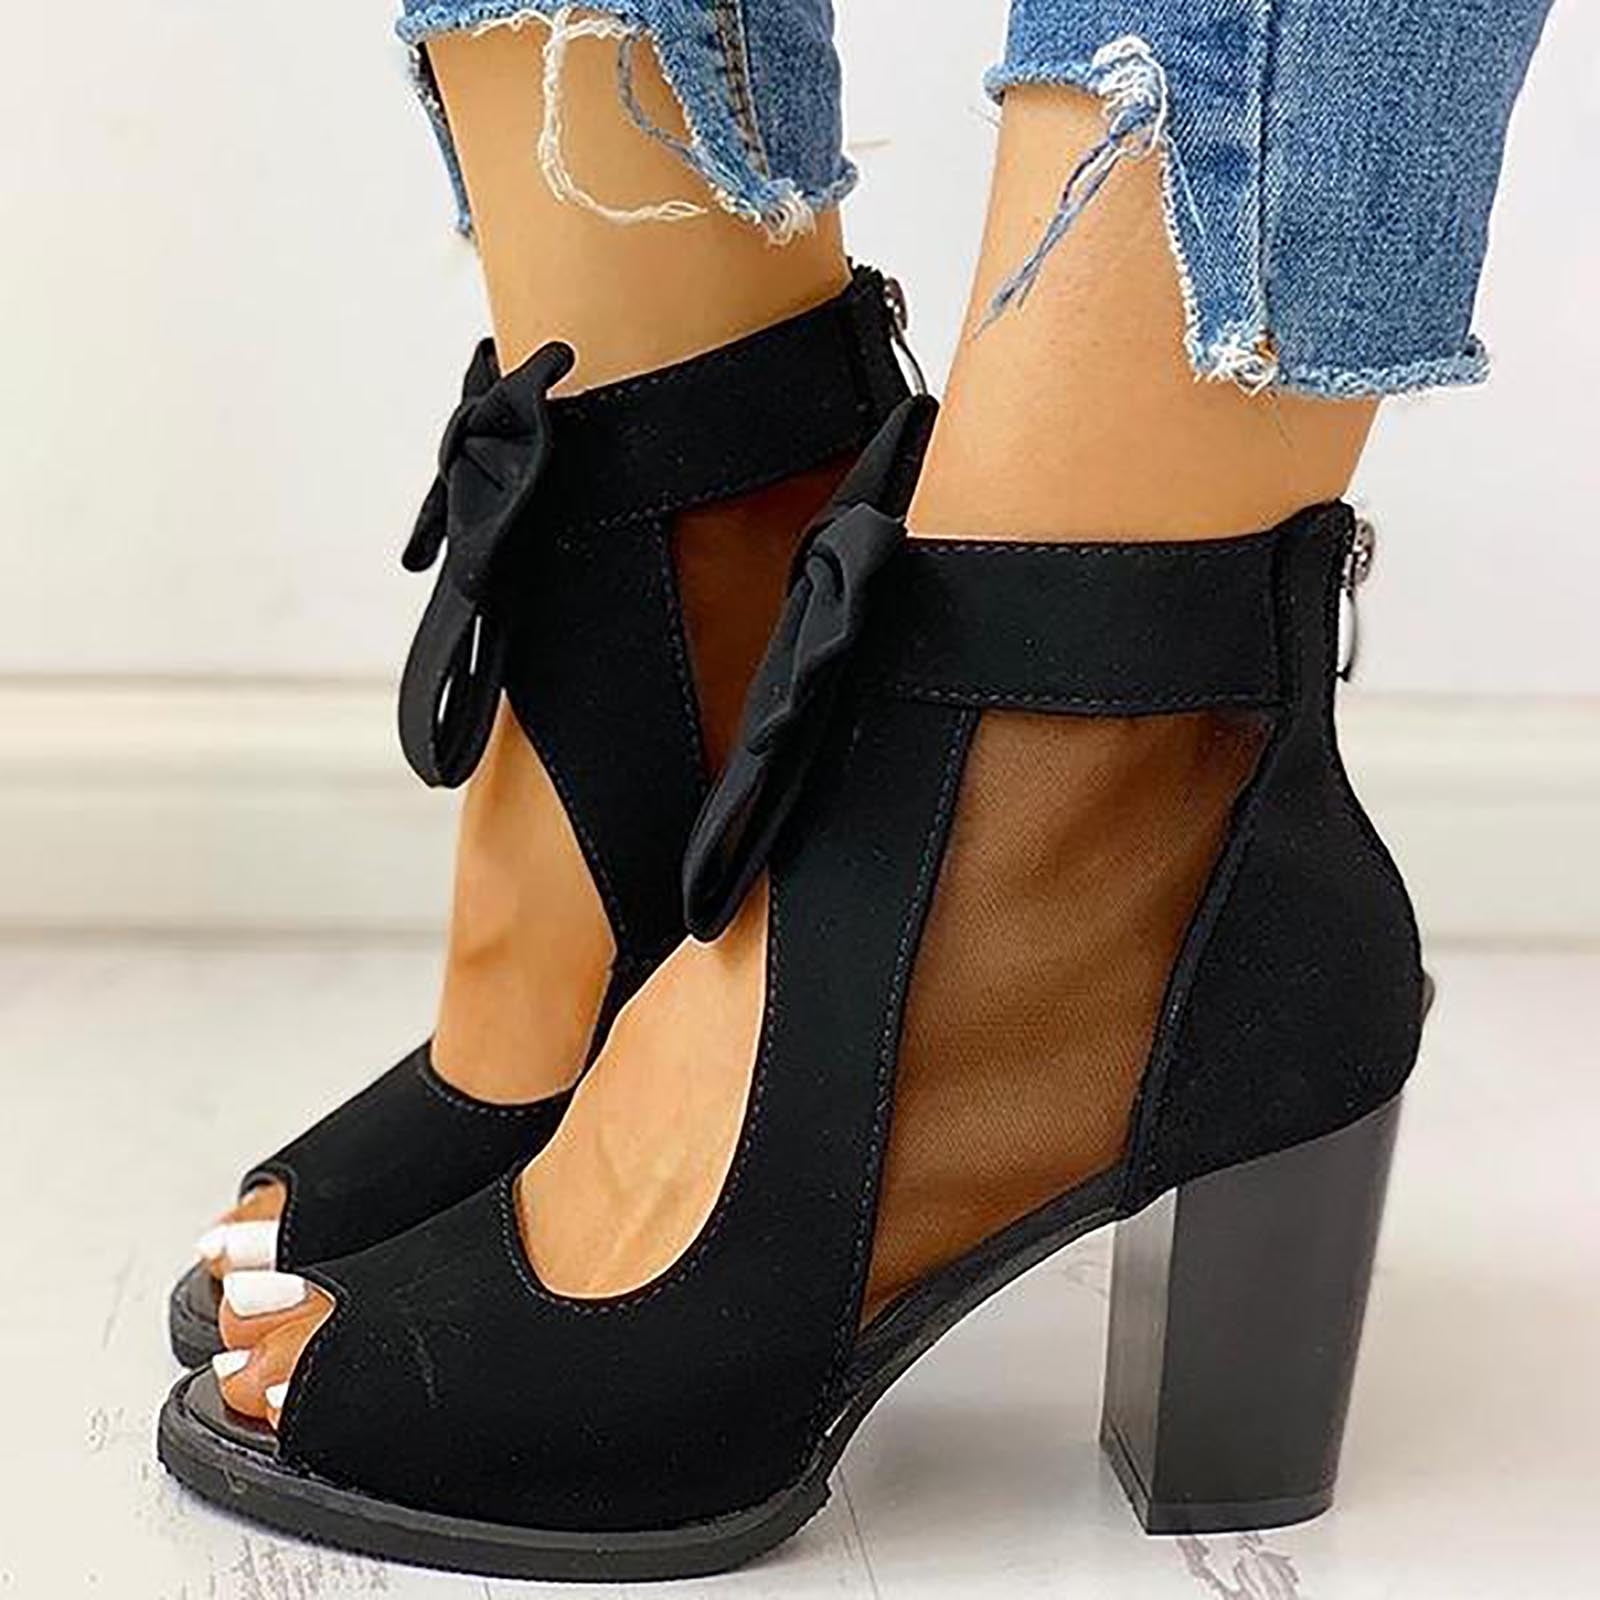 New Look Black Velvet Diamante Strap Stiletto Heel Sandals | Very Ireland